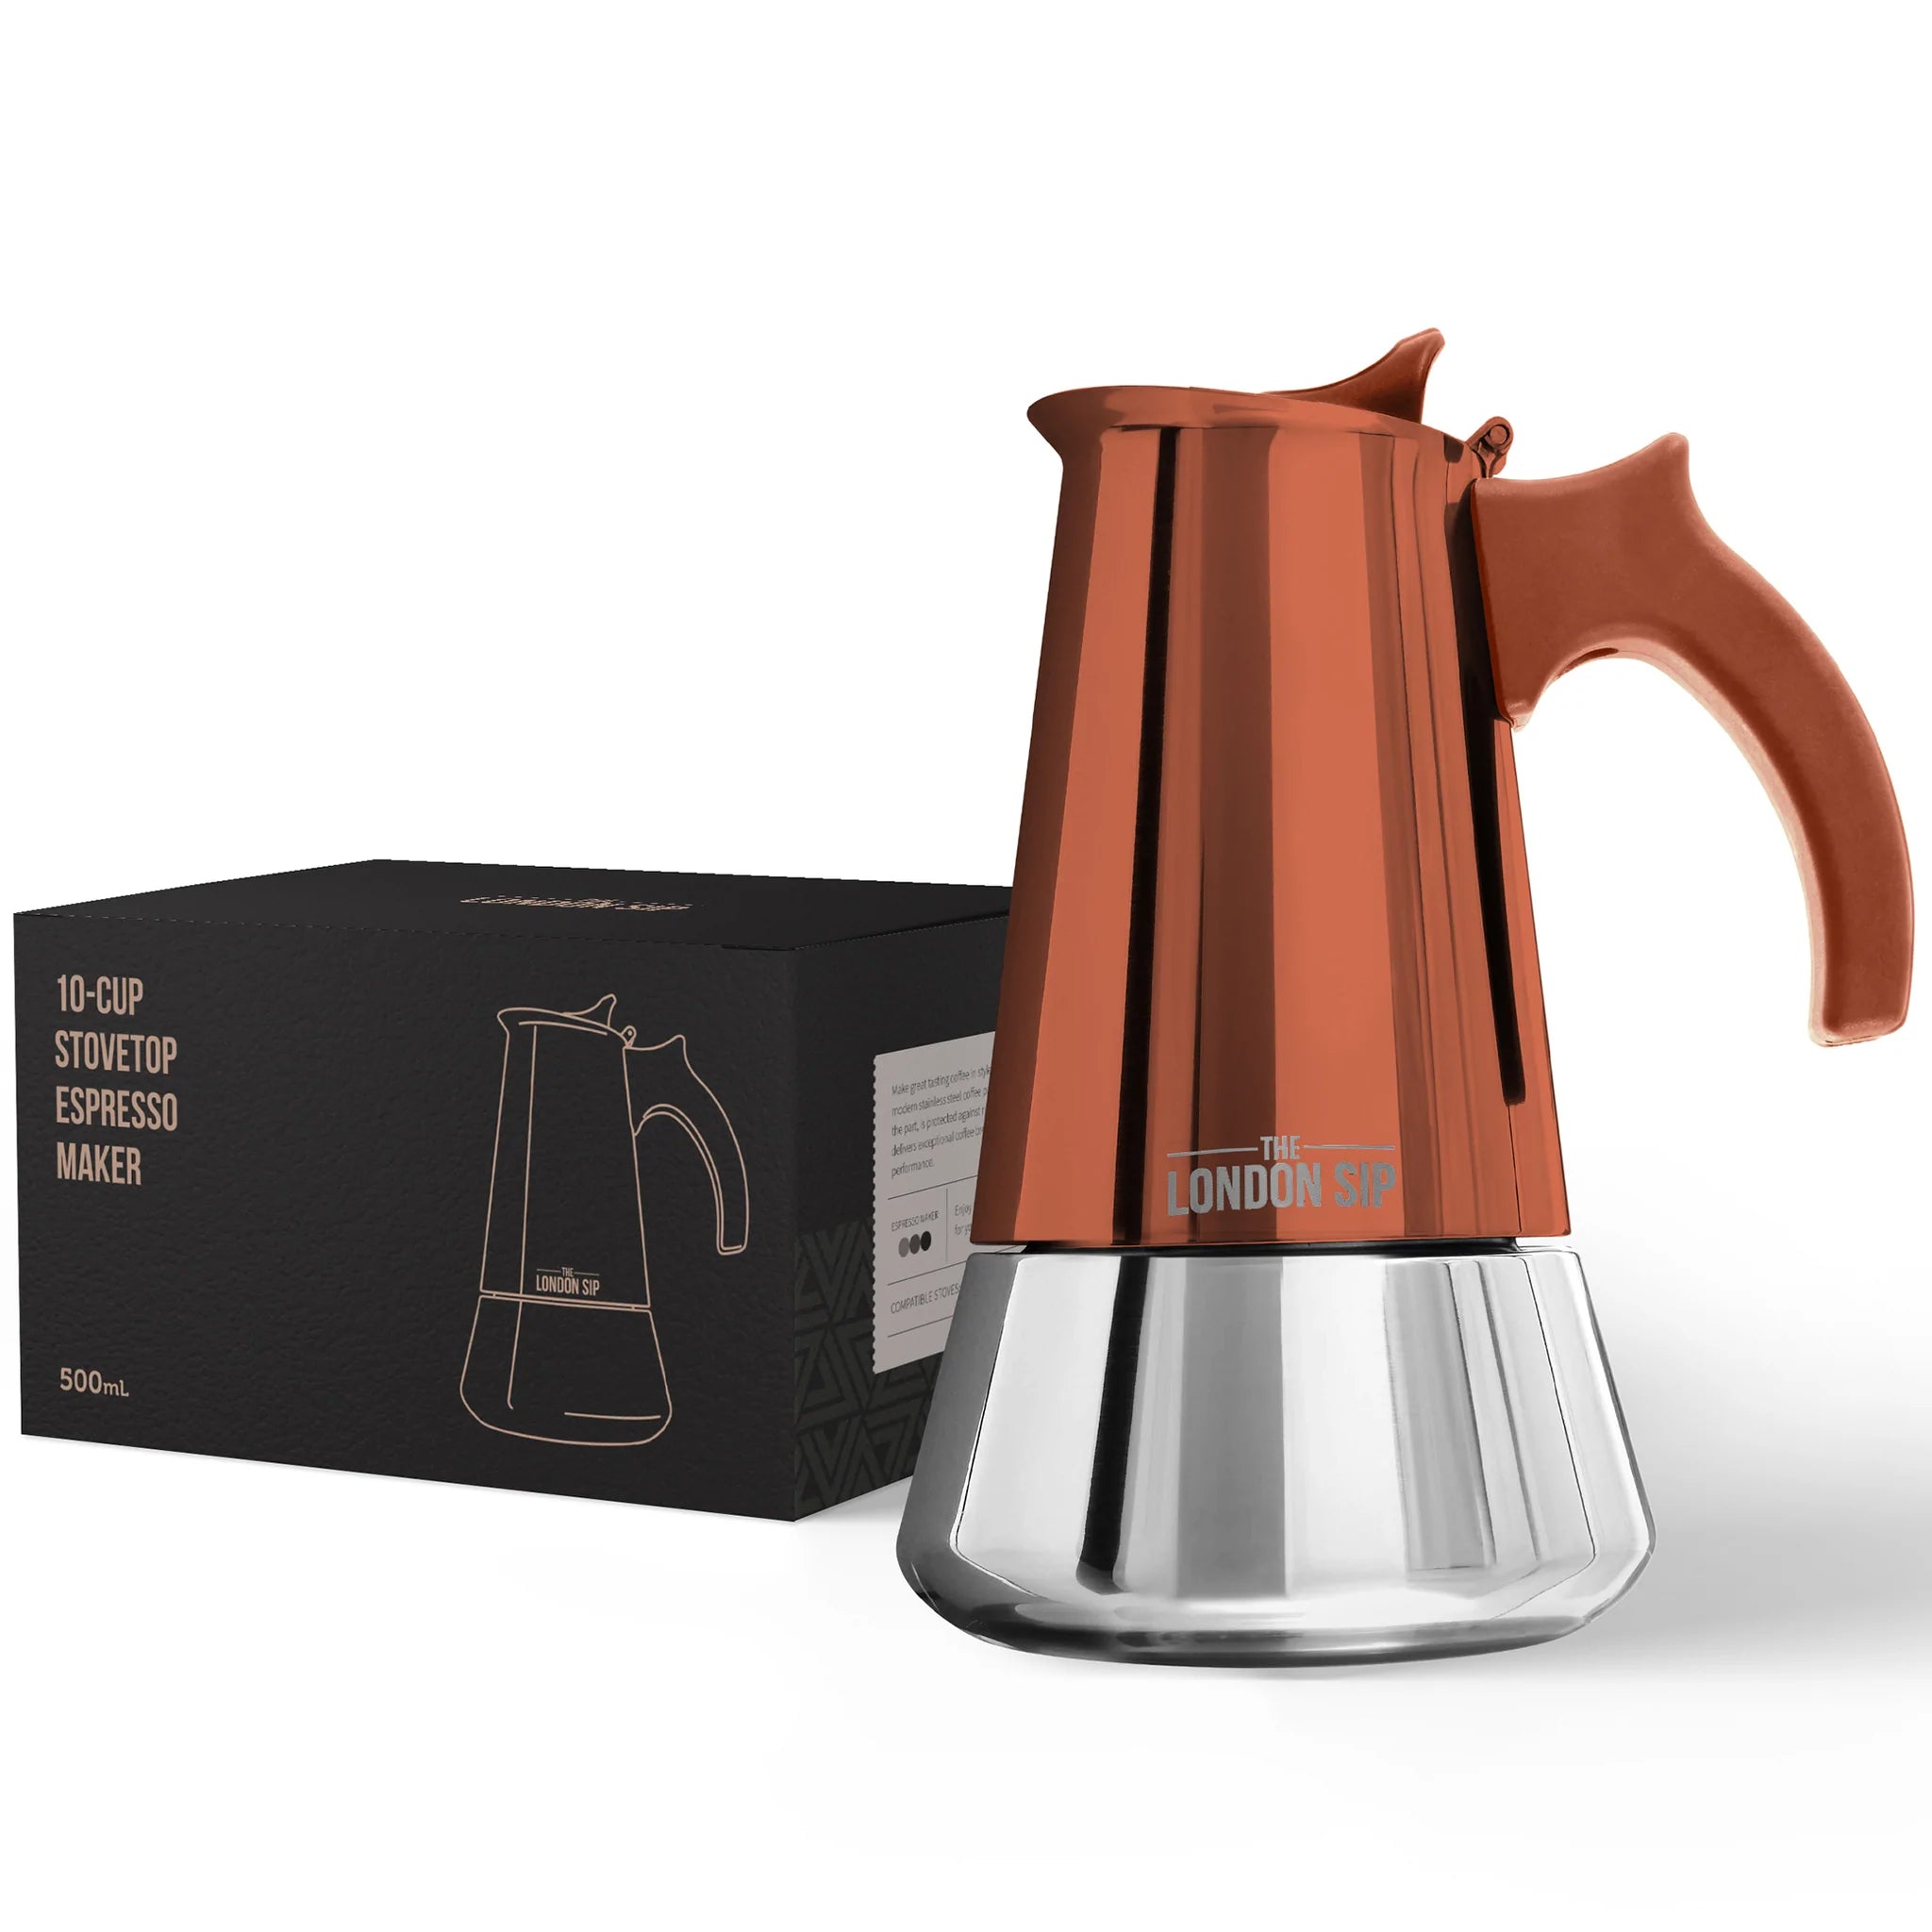  London Sip Stainless Steel Stove-Top Espresso Maker Coffee Pot  Italian Moka Percolator, Silver, 6 Cup: Home & Kitchen